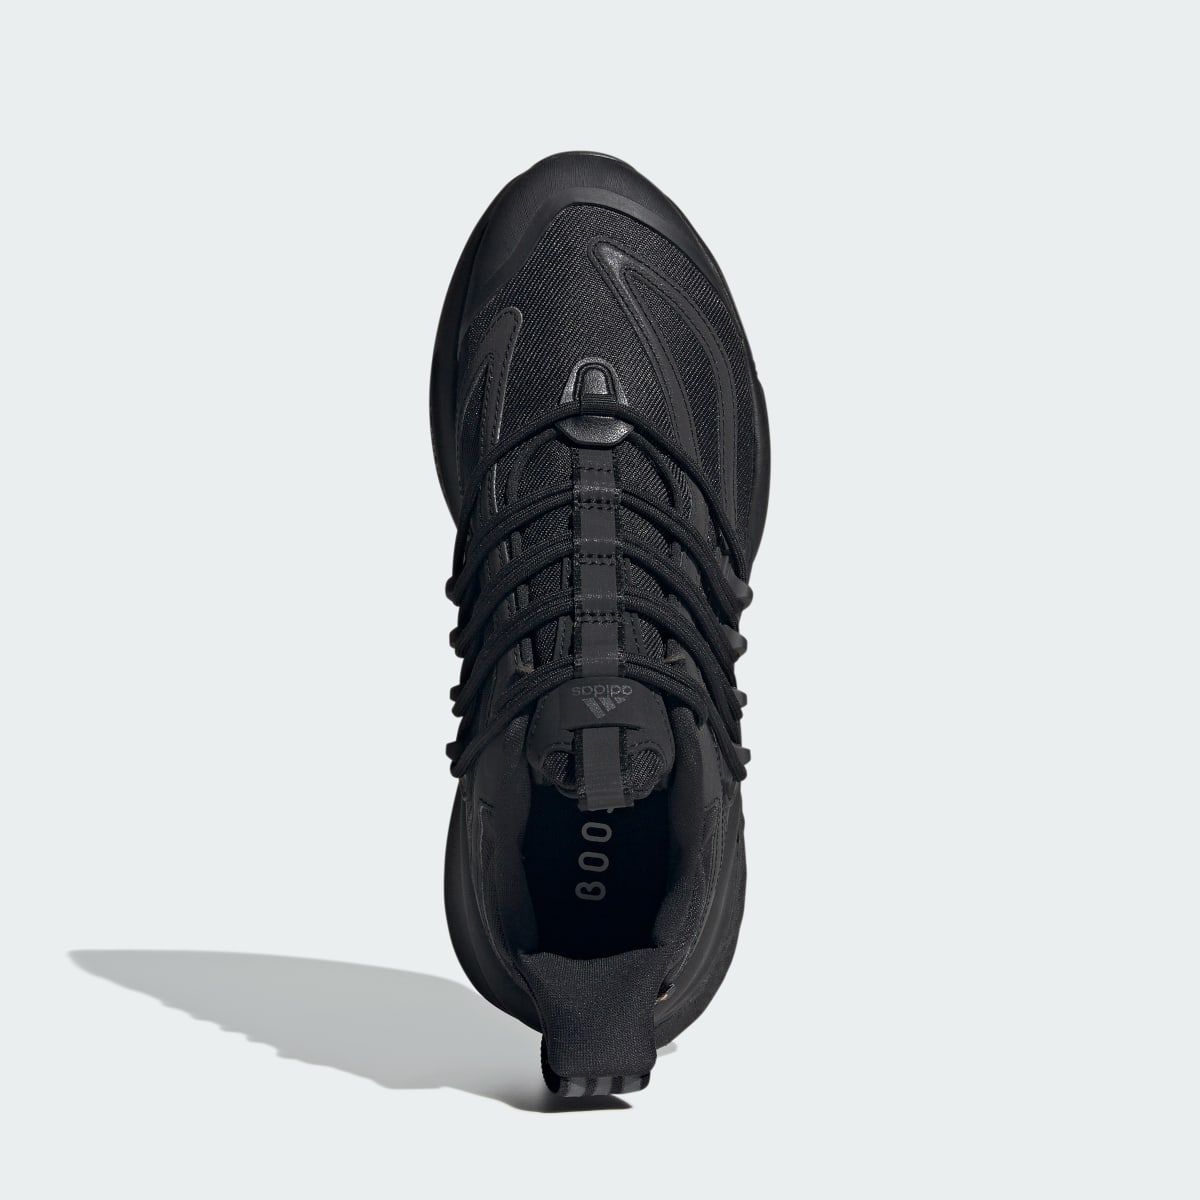 Adidas Alphaboost V1 Shoes. 9